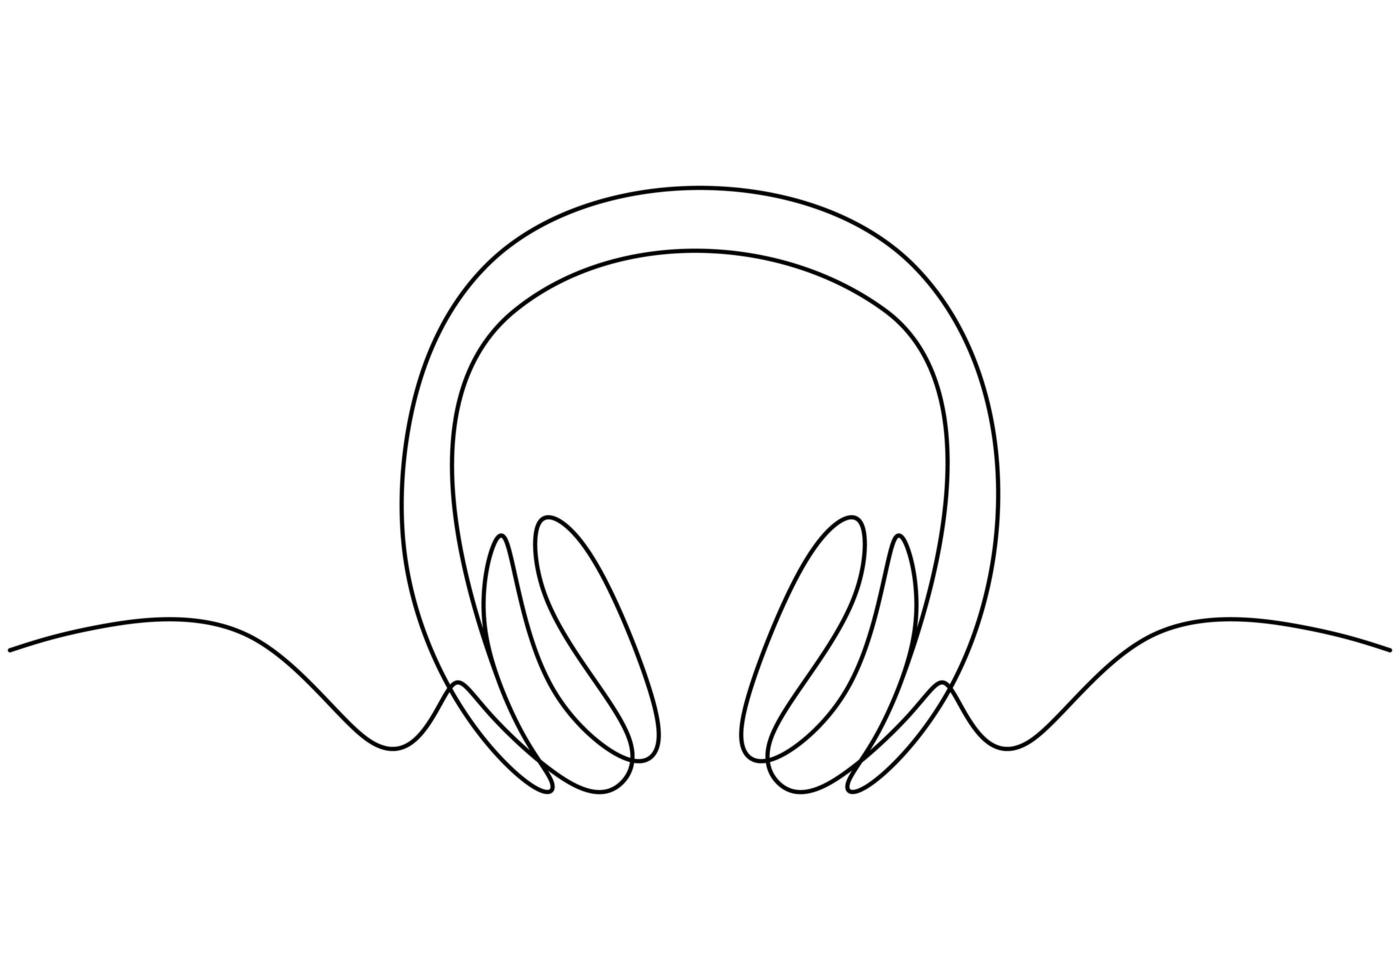 un dibujo de línea de diseño de arte de línea continua de dispositivo de altavoz para auriculares aislado sobre fondo blanco. vector